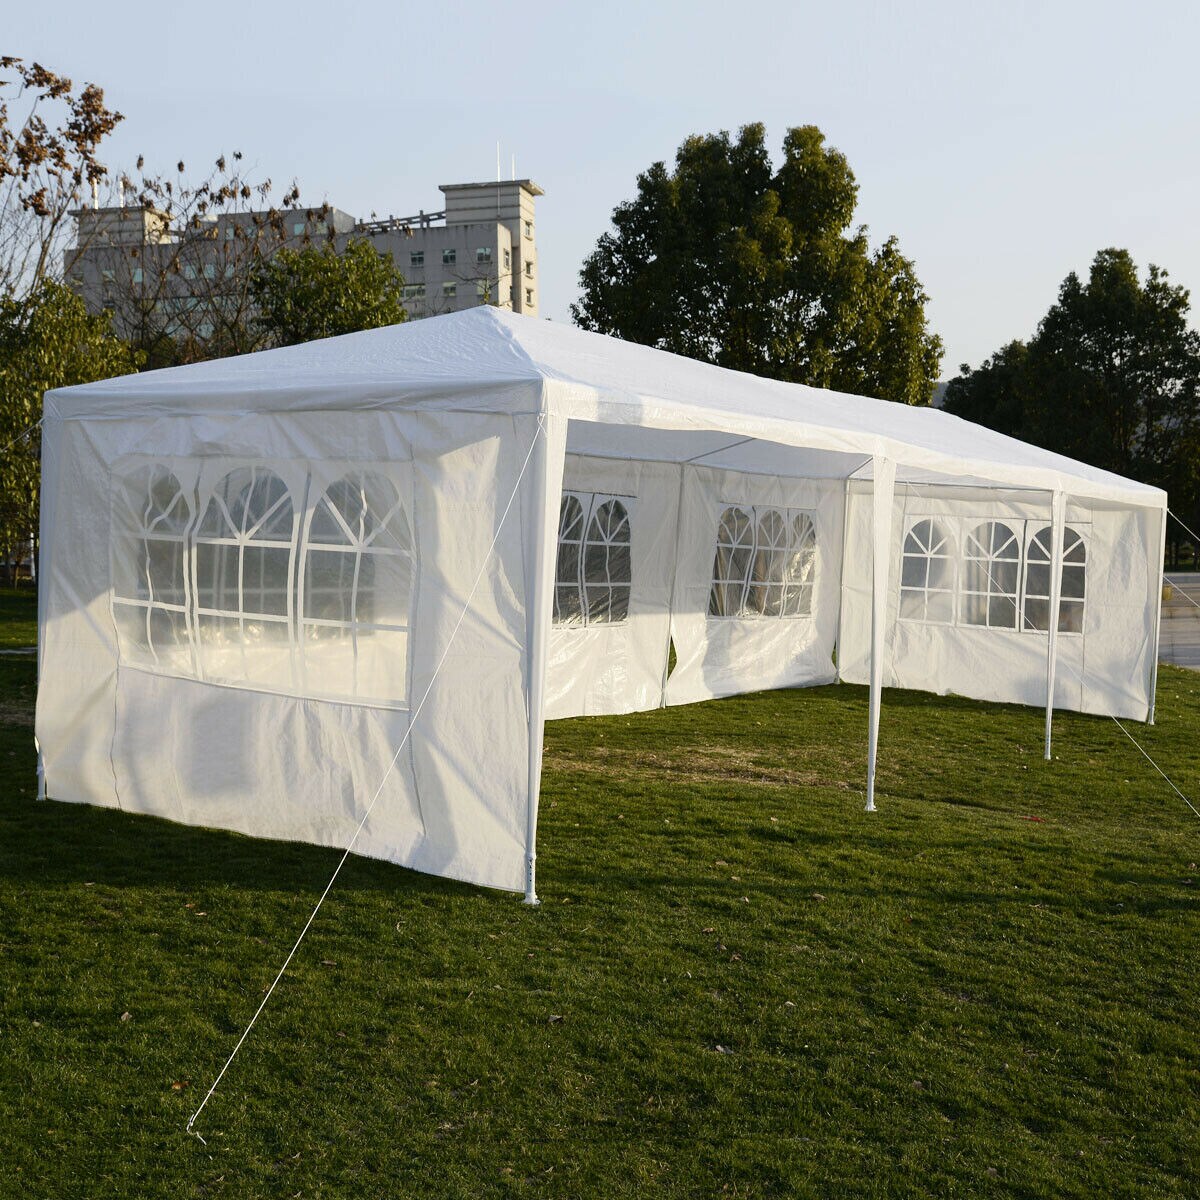 10’ x 10’ Easy Pop Up Gazebo Canopy Party Tent with Sidewalls Garden Lawn Yard